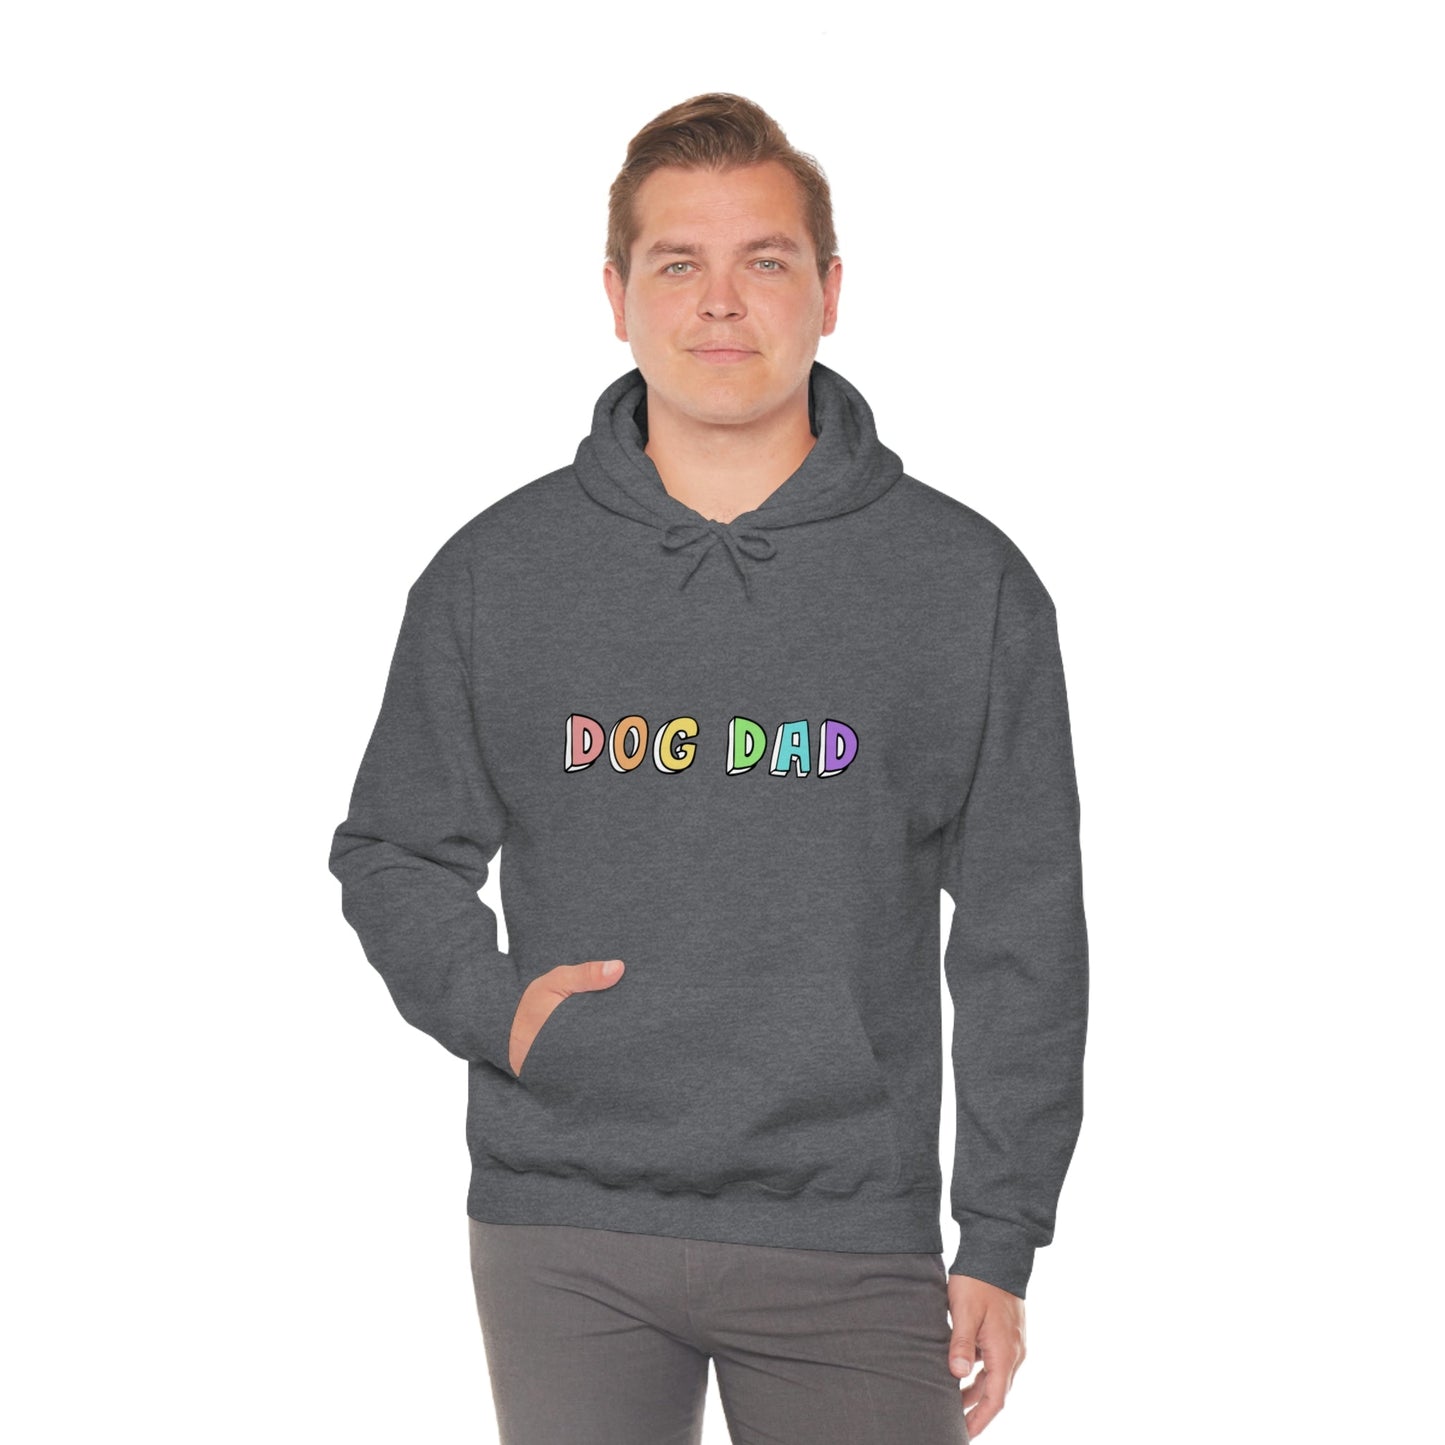 Dog Dad | Hooded Sweatshirt - Detezi Designs-28398680440227936267